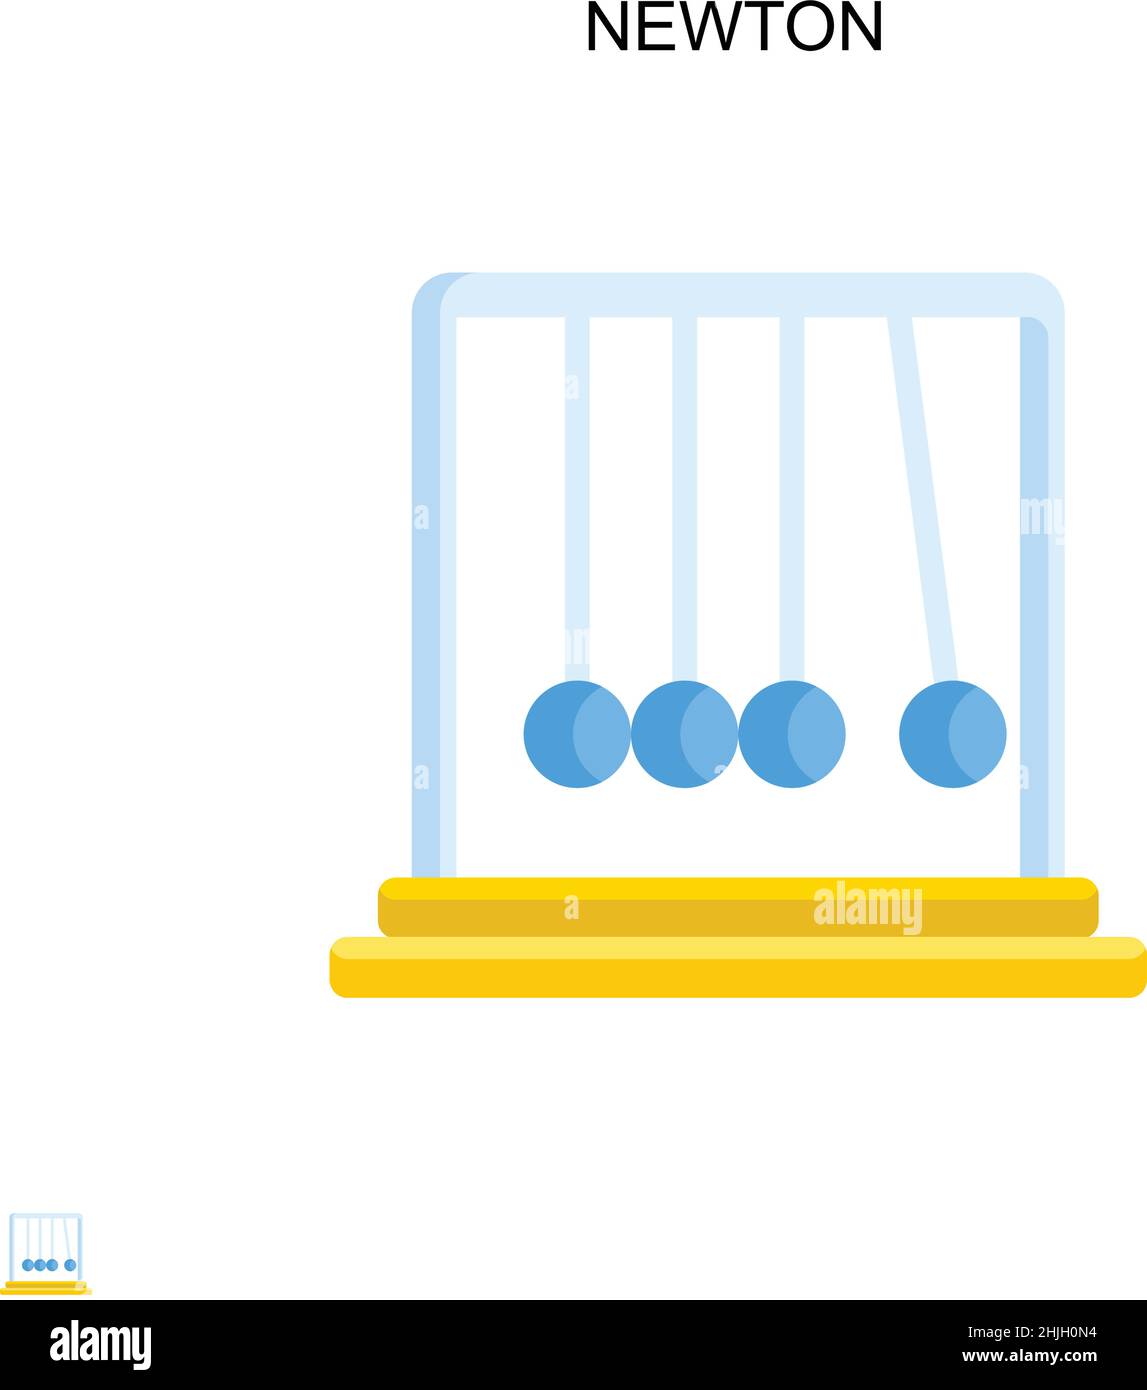 Einfaches Newton-Vektor-Symbol. Illustration Symbol Design-Vorlage für Web mobile UI-Element. Stock Vektor